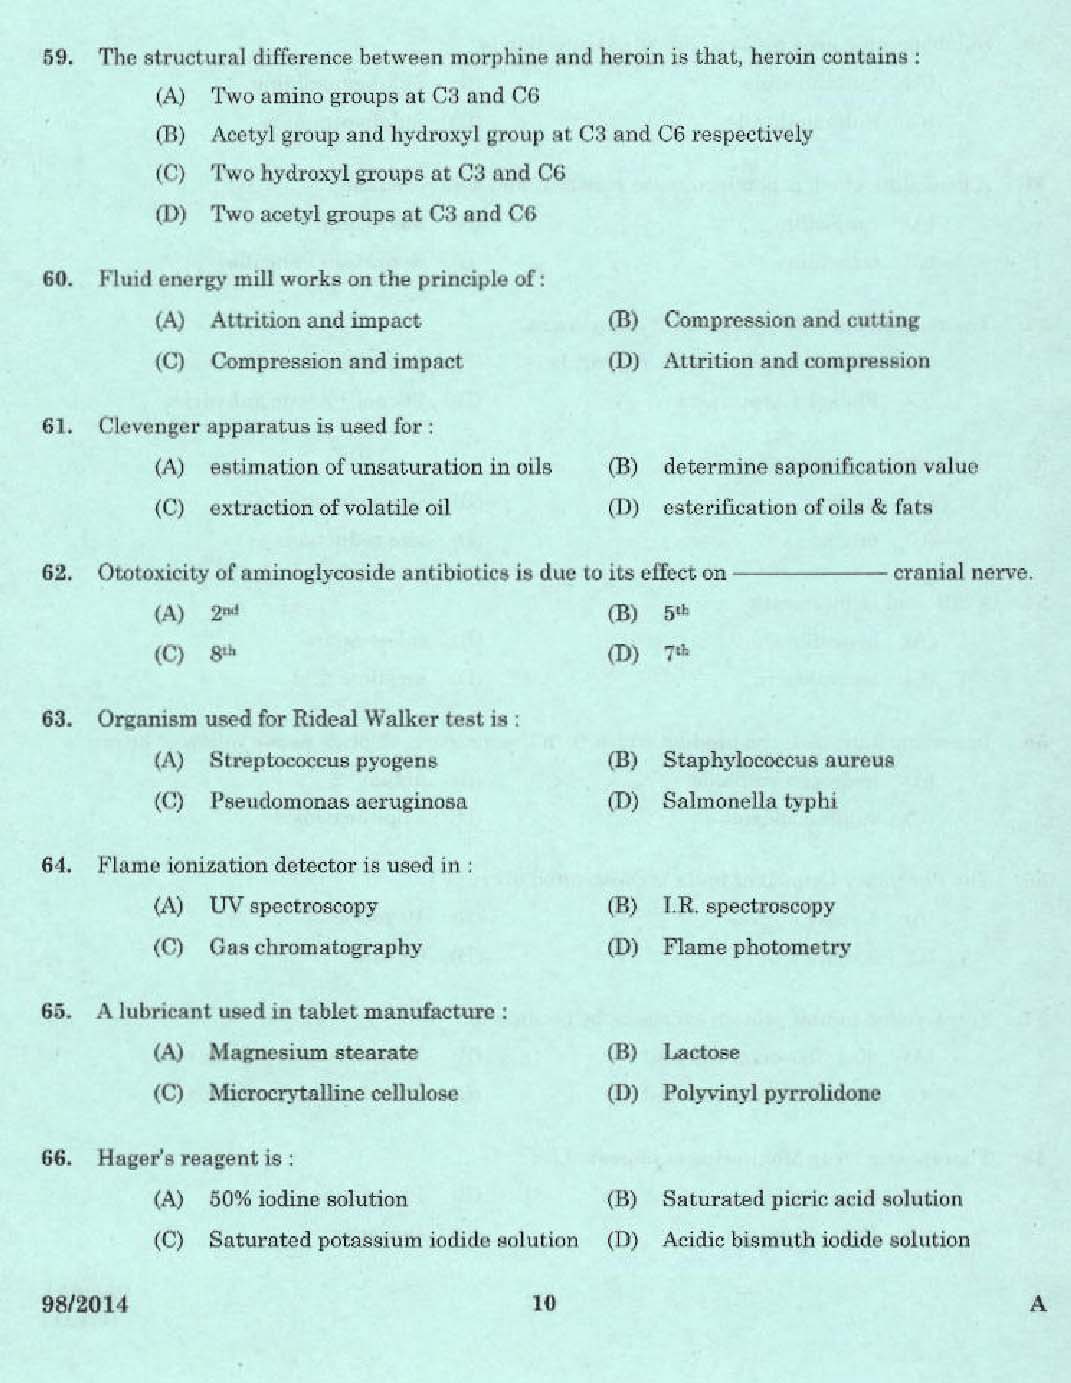 Kerala PSC Pharma Chemist Exam Code 982014 8